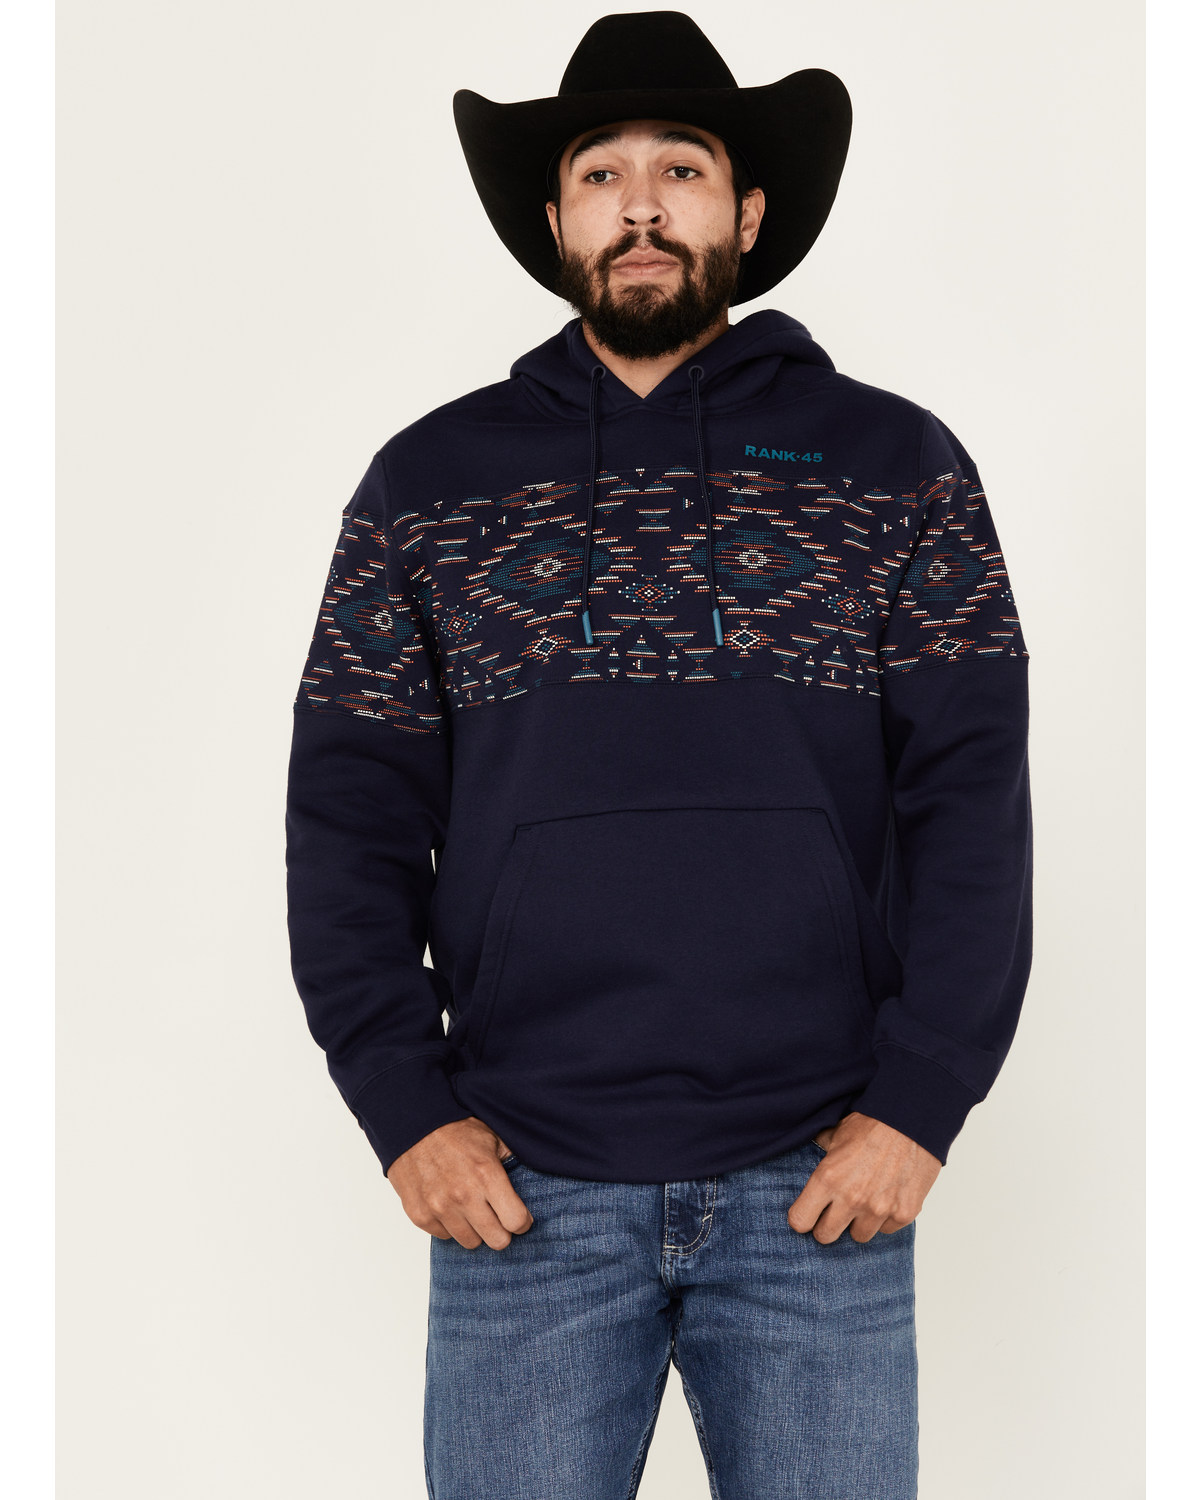 RANK 45® Men's Covebull Southwestern Print Hooded Sweatshirt